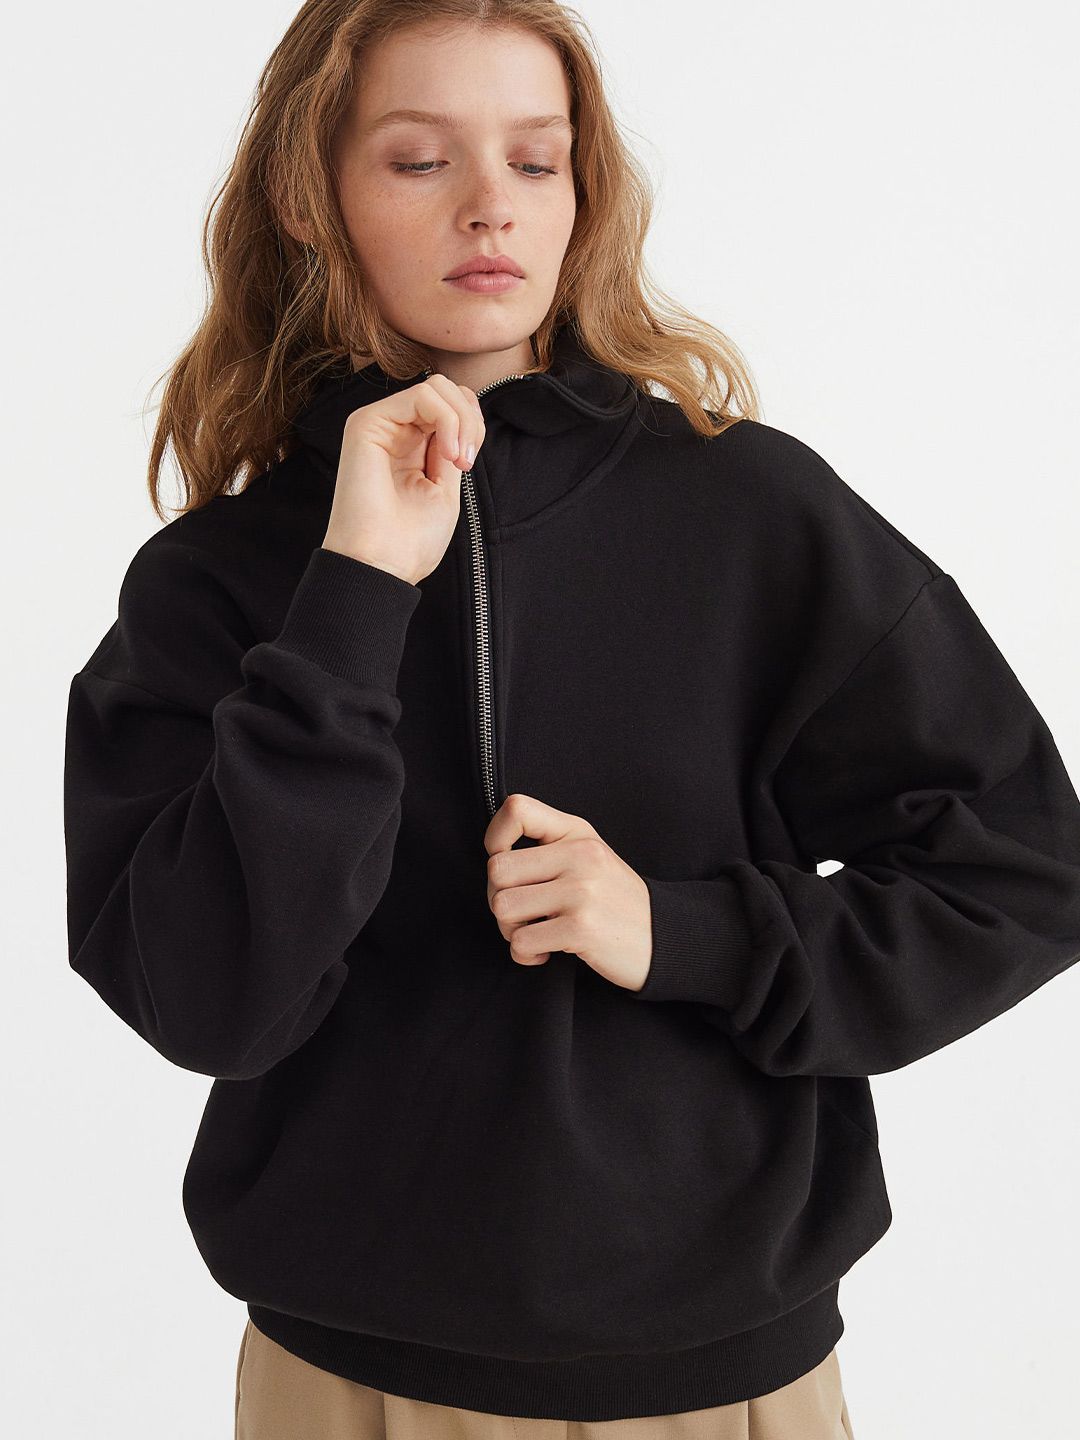 H&M Women Black Solid Collared Sweatshirt Price in India